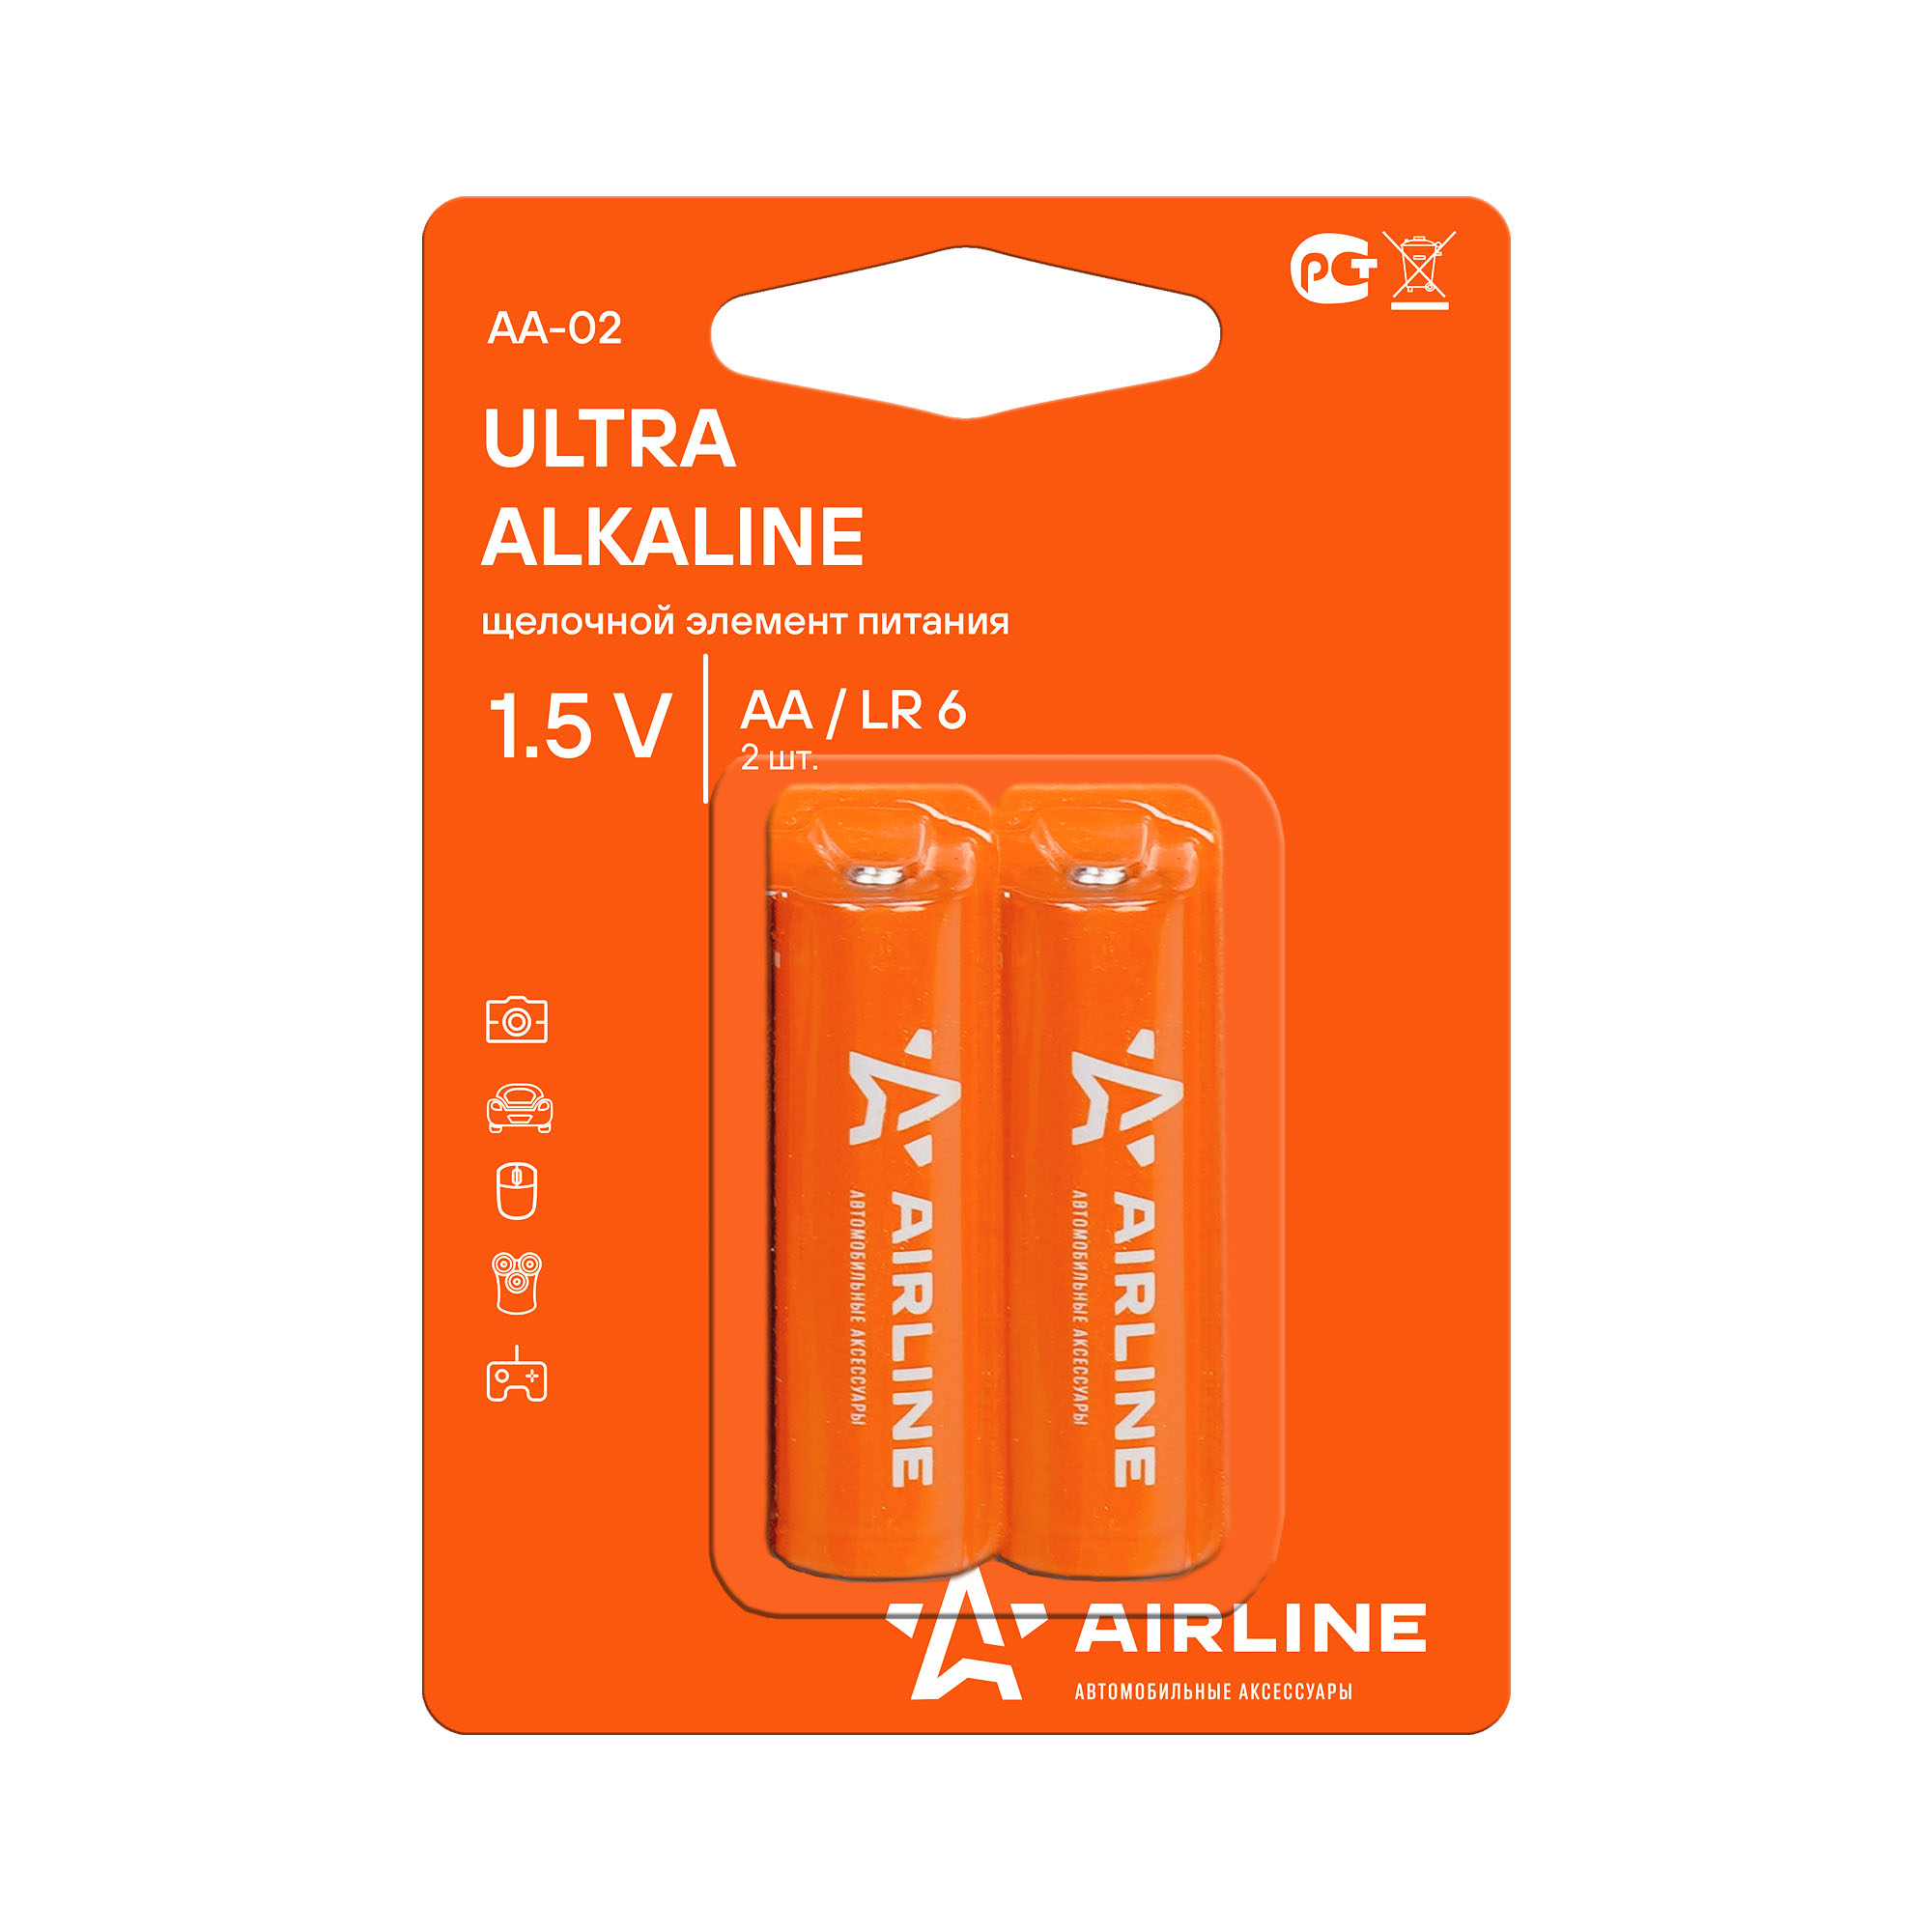 Батарейка алкалиновая AIRLINE ultra Alkaline AA 1,5V упаковка 2 шт. AA-02